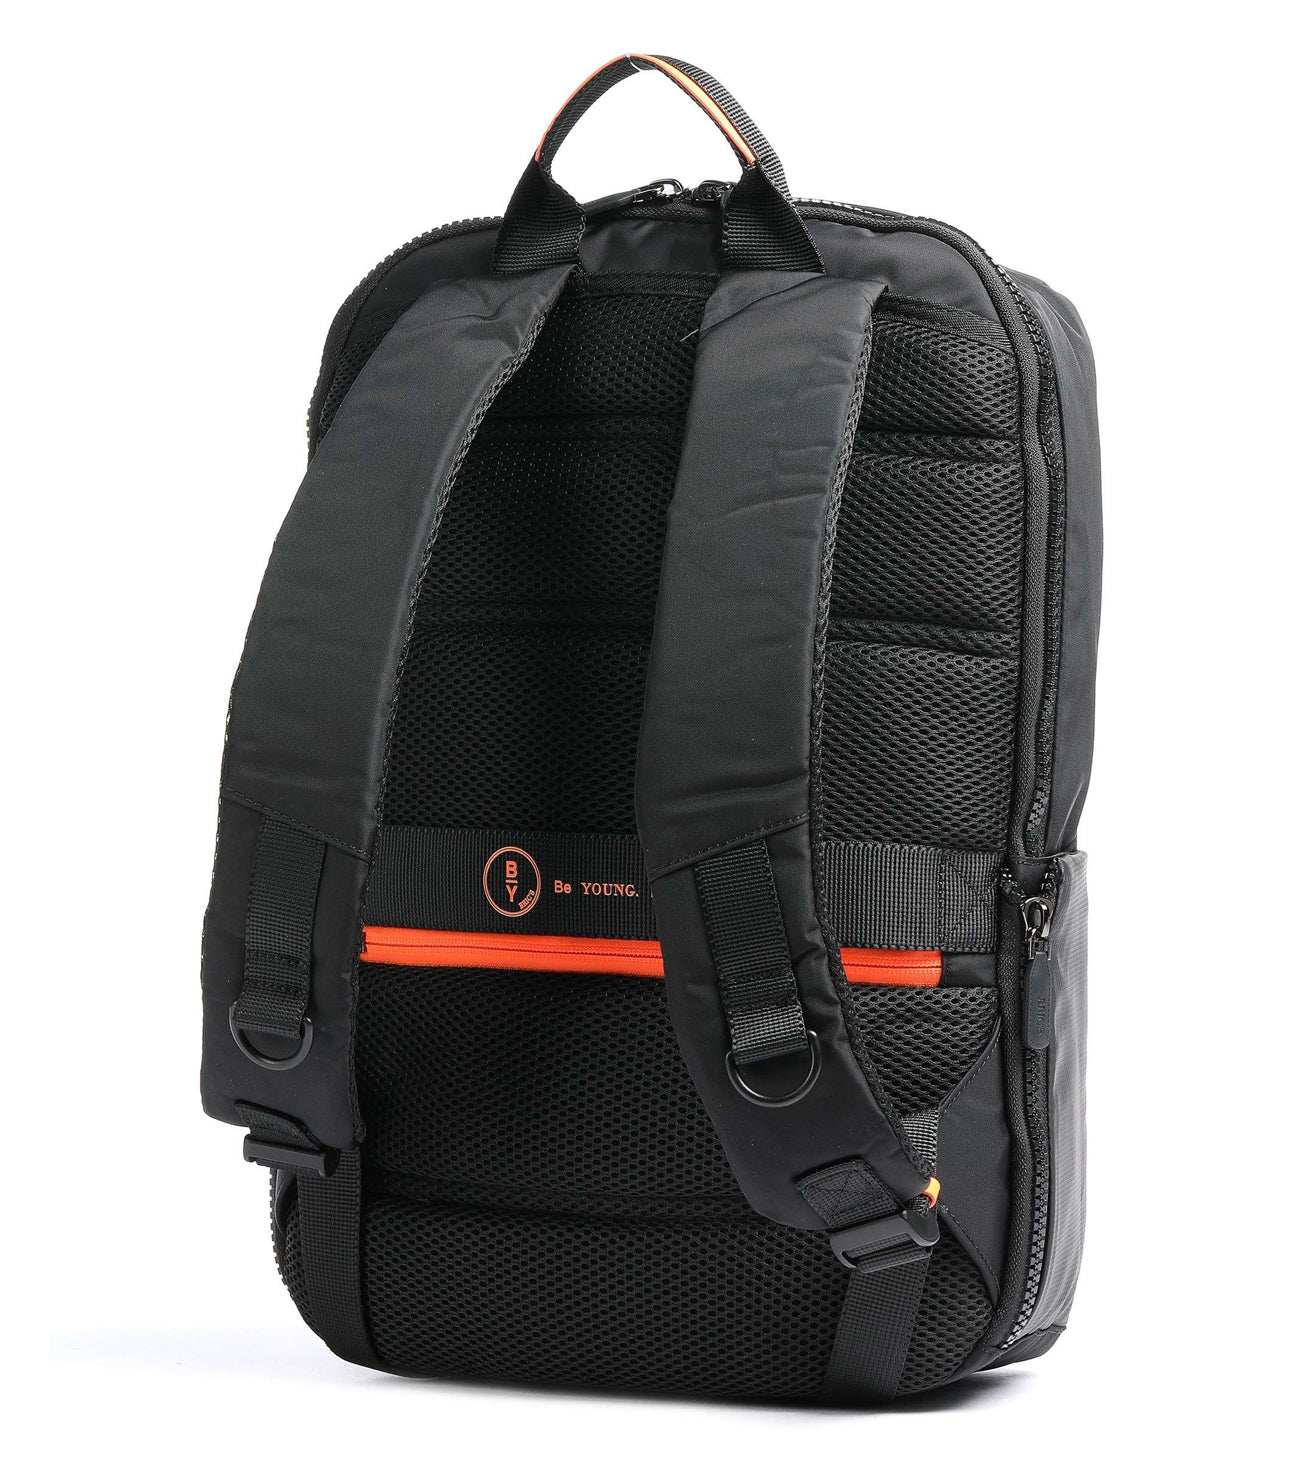 Bric's B|Y Eolo Unisex Backpack